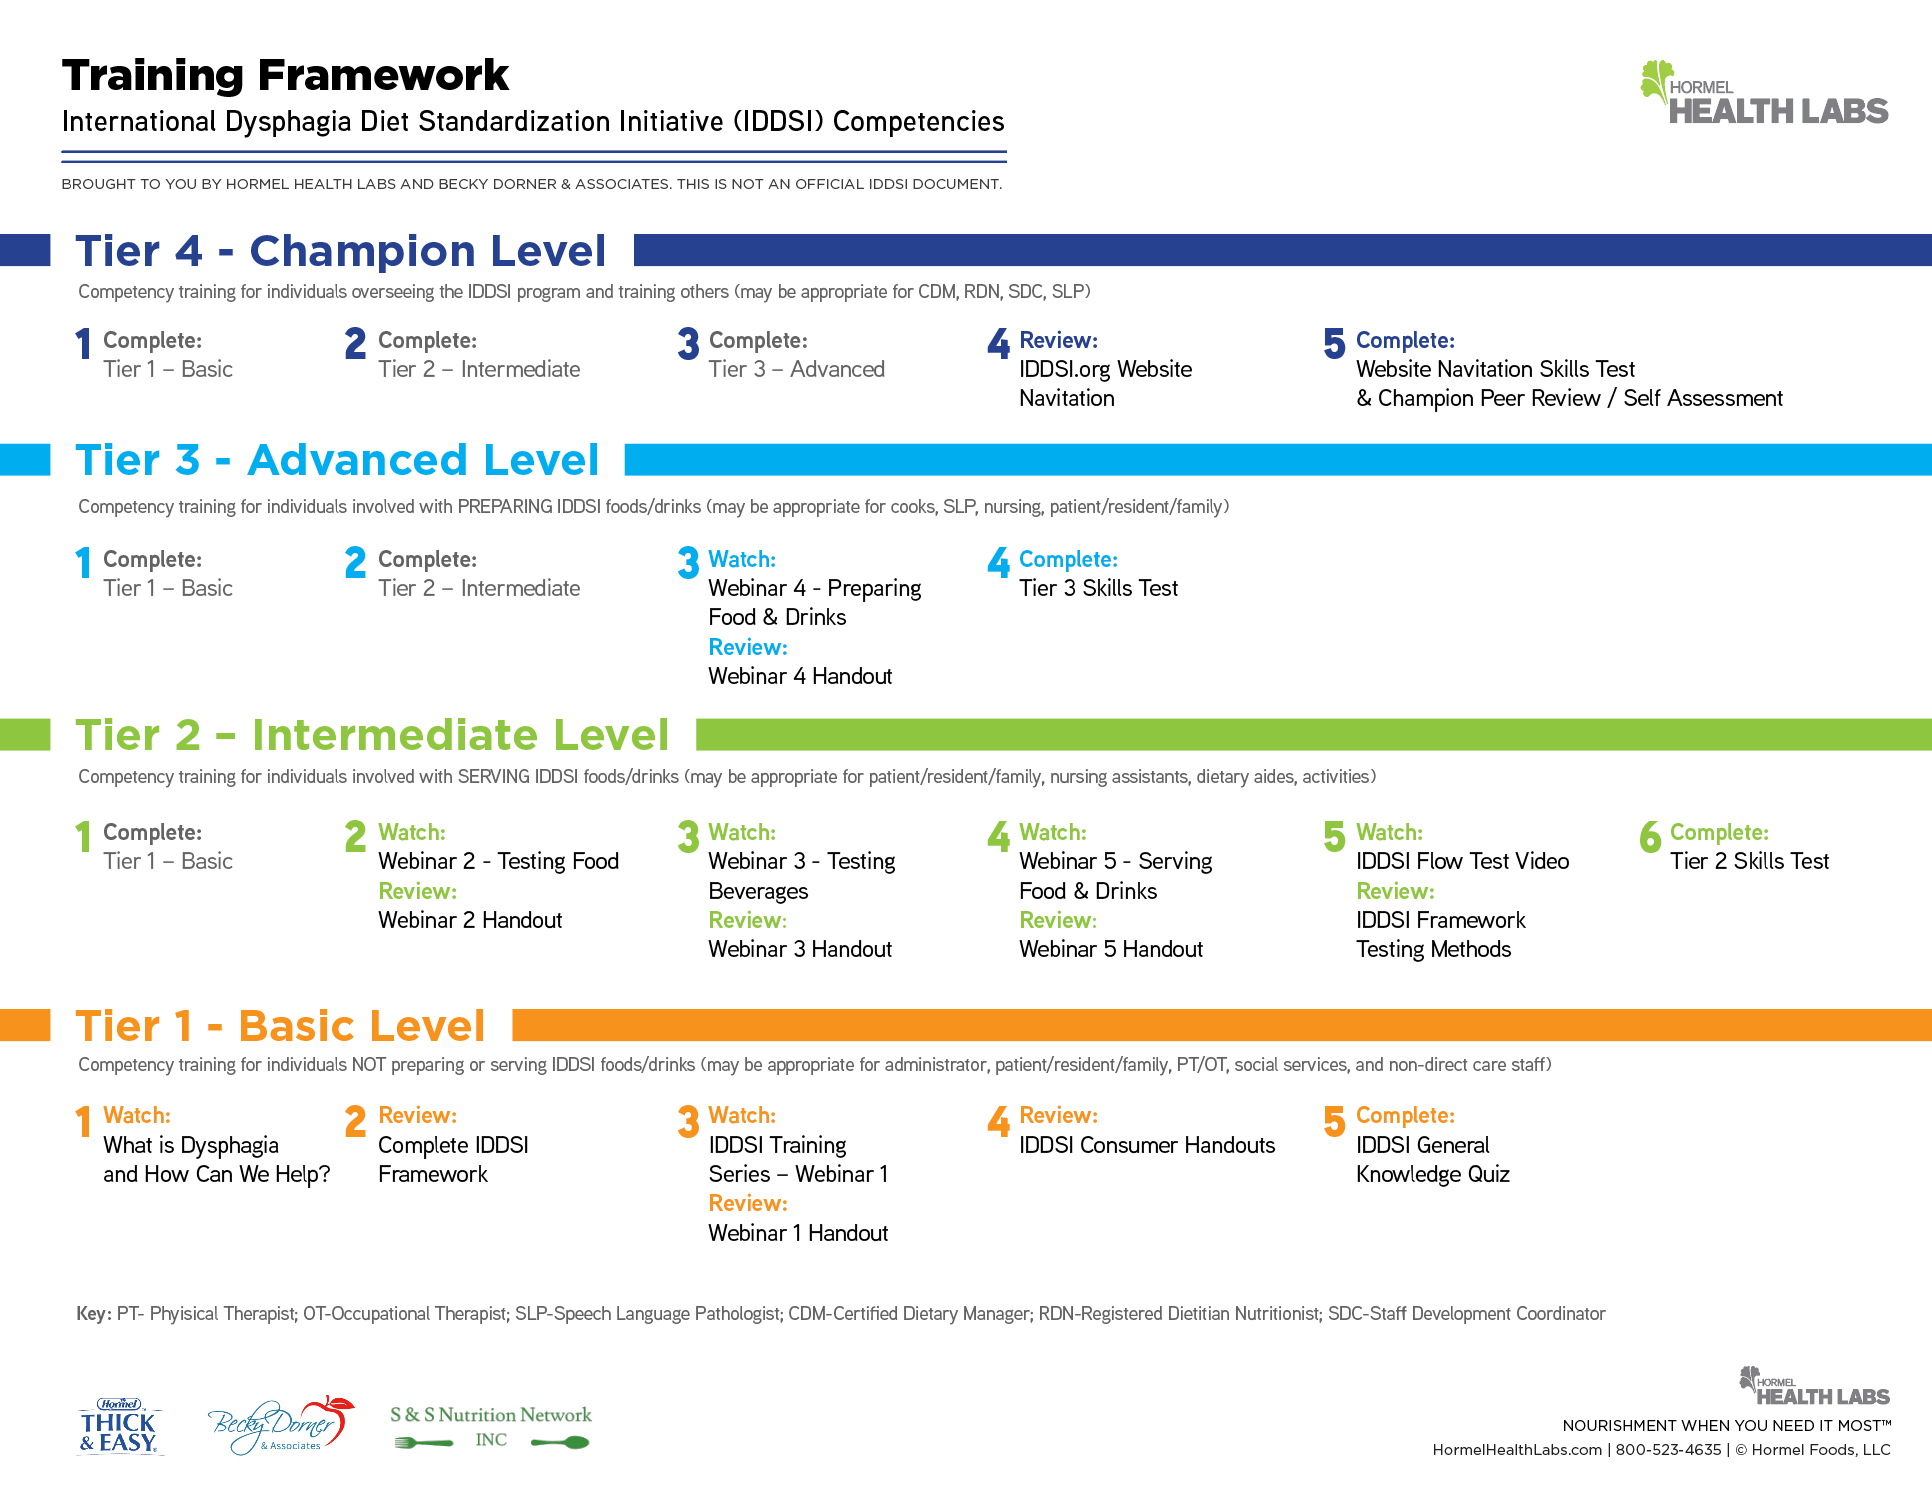 IDDSI Competencies Framework